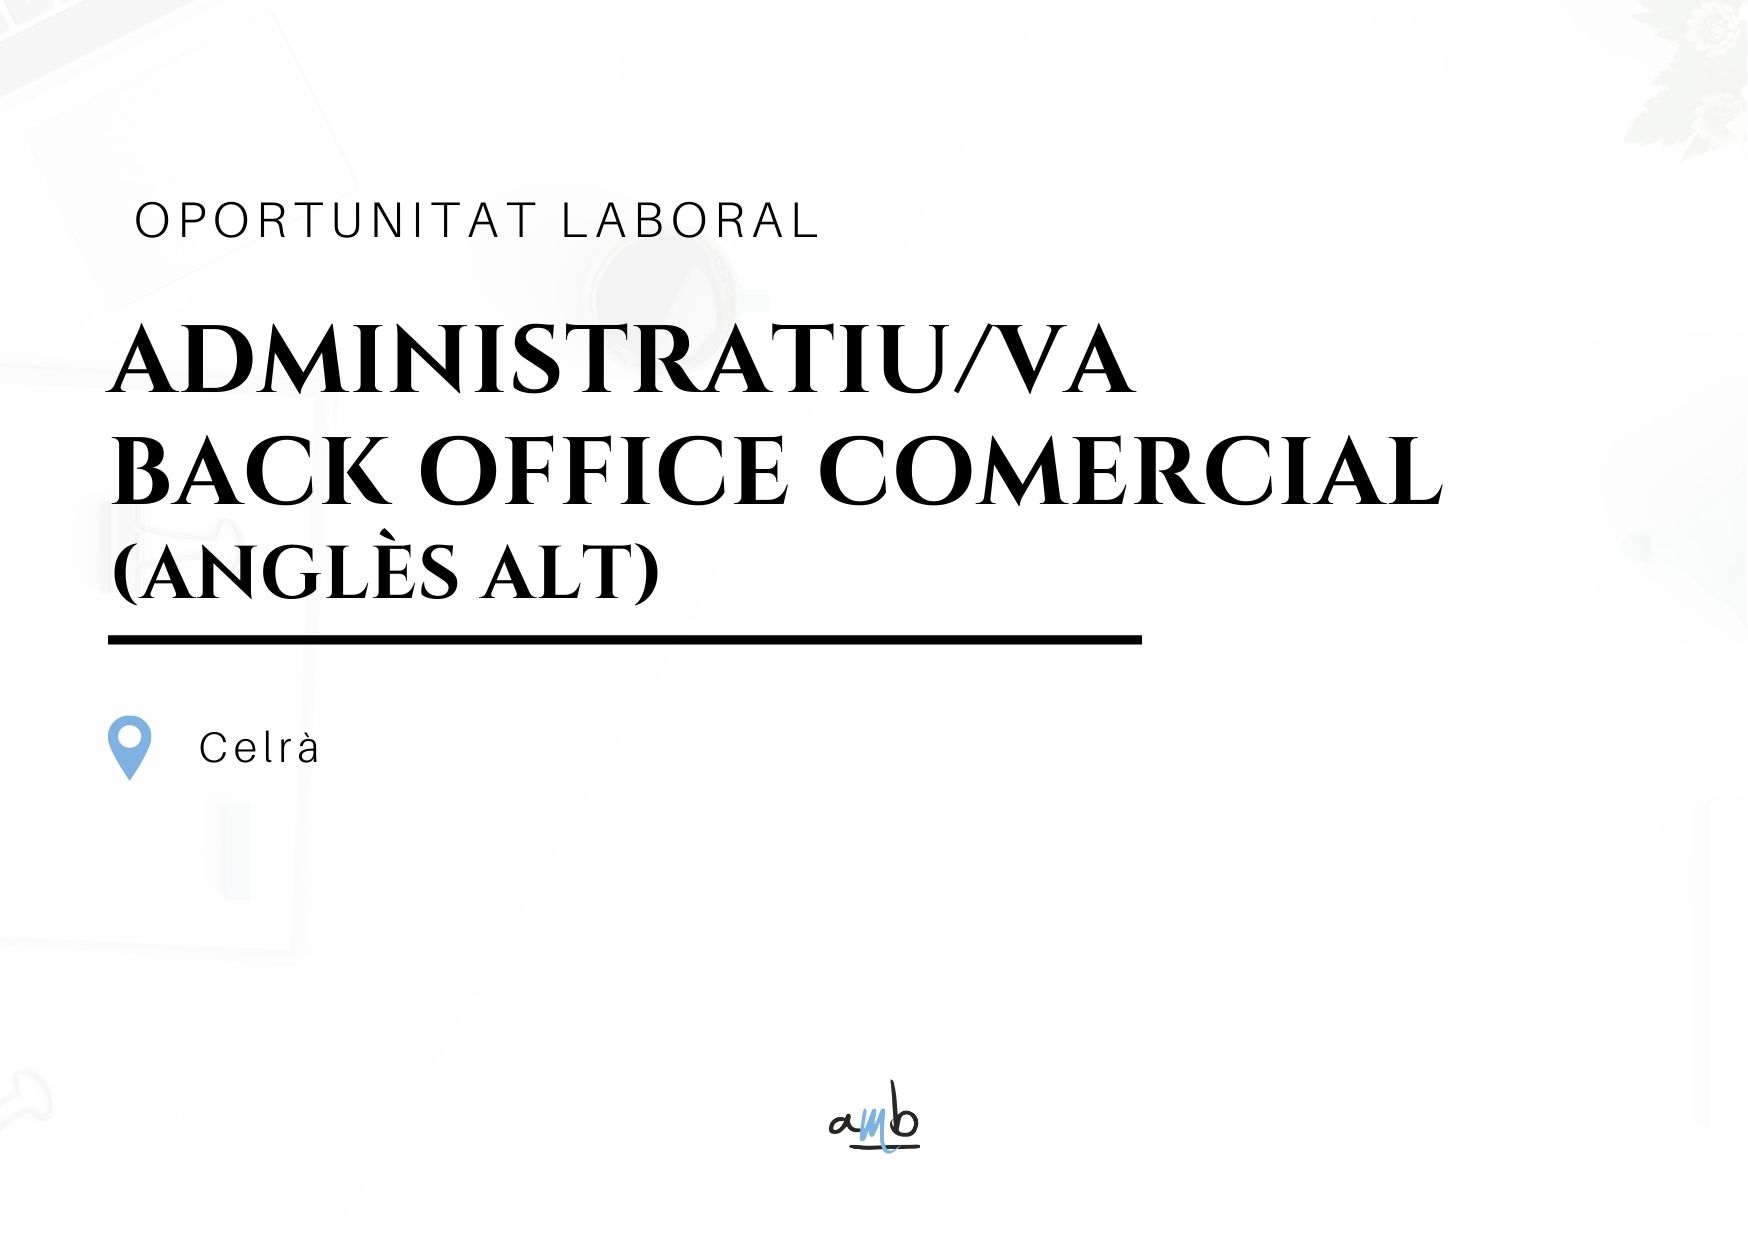 Administratiu/va Back Office Comercial (Anglès alt)